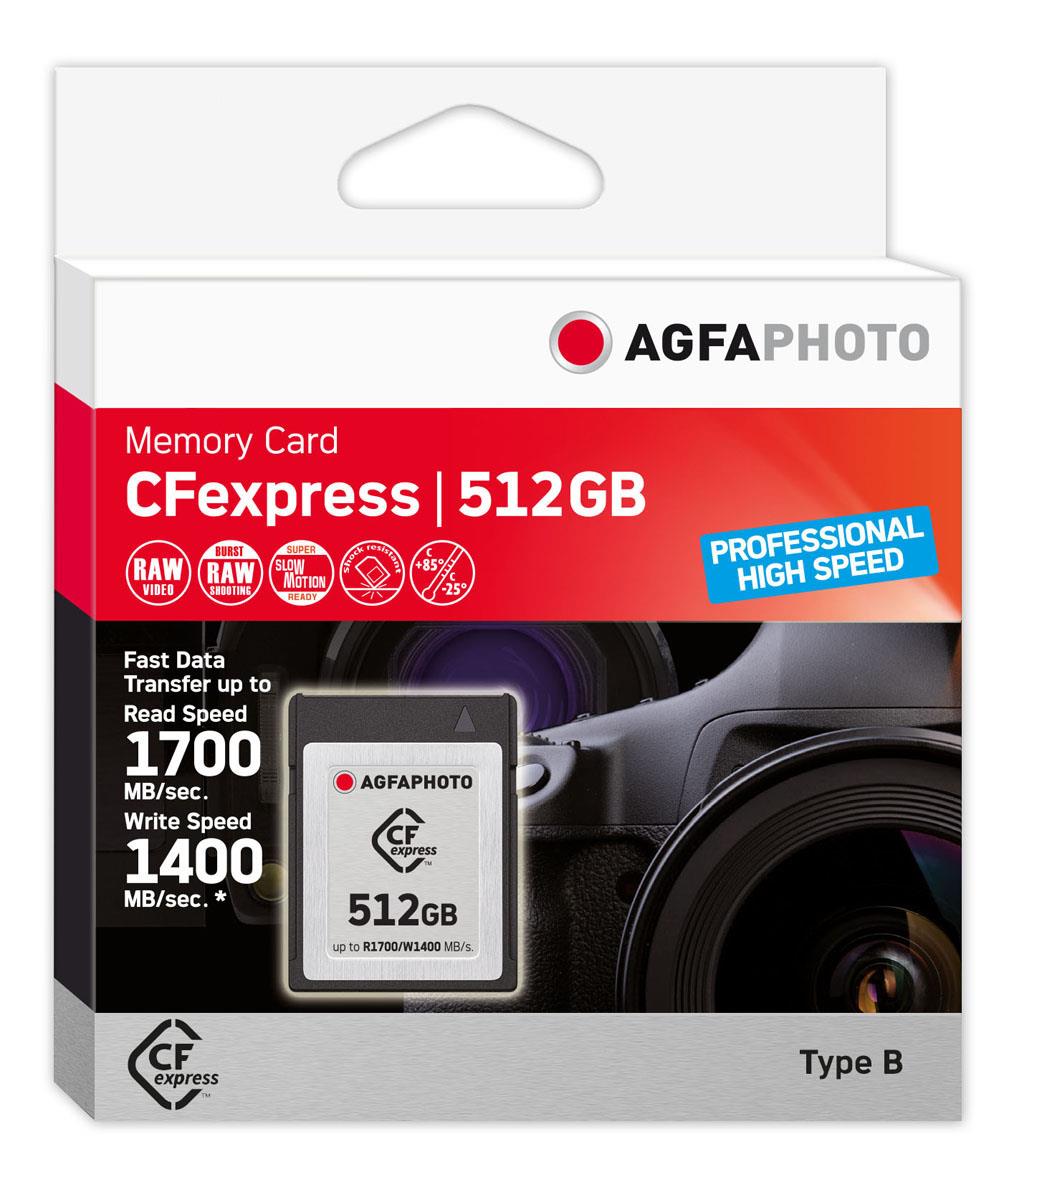 AgfaPhoto 512GB CFexpress-Karte Prof. High Speed, 1400MBs/1700MBs, Typ-B